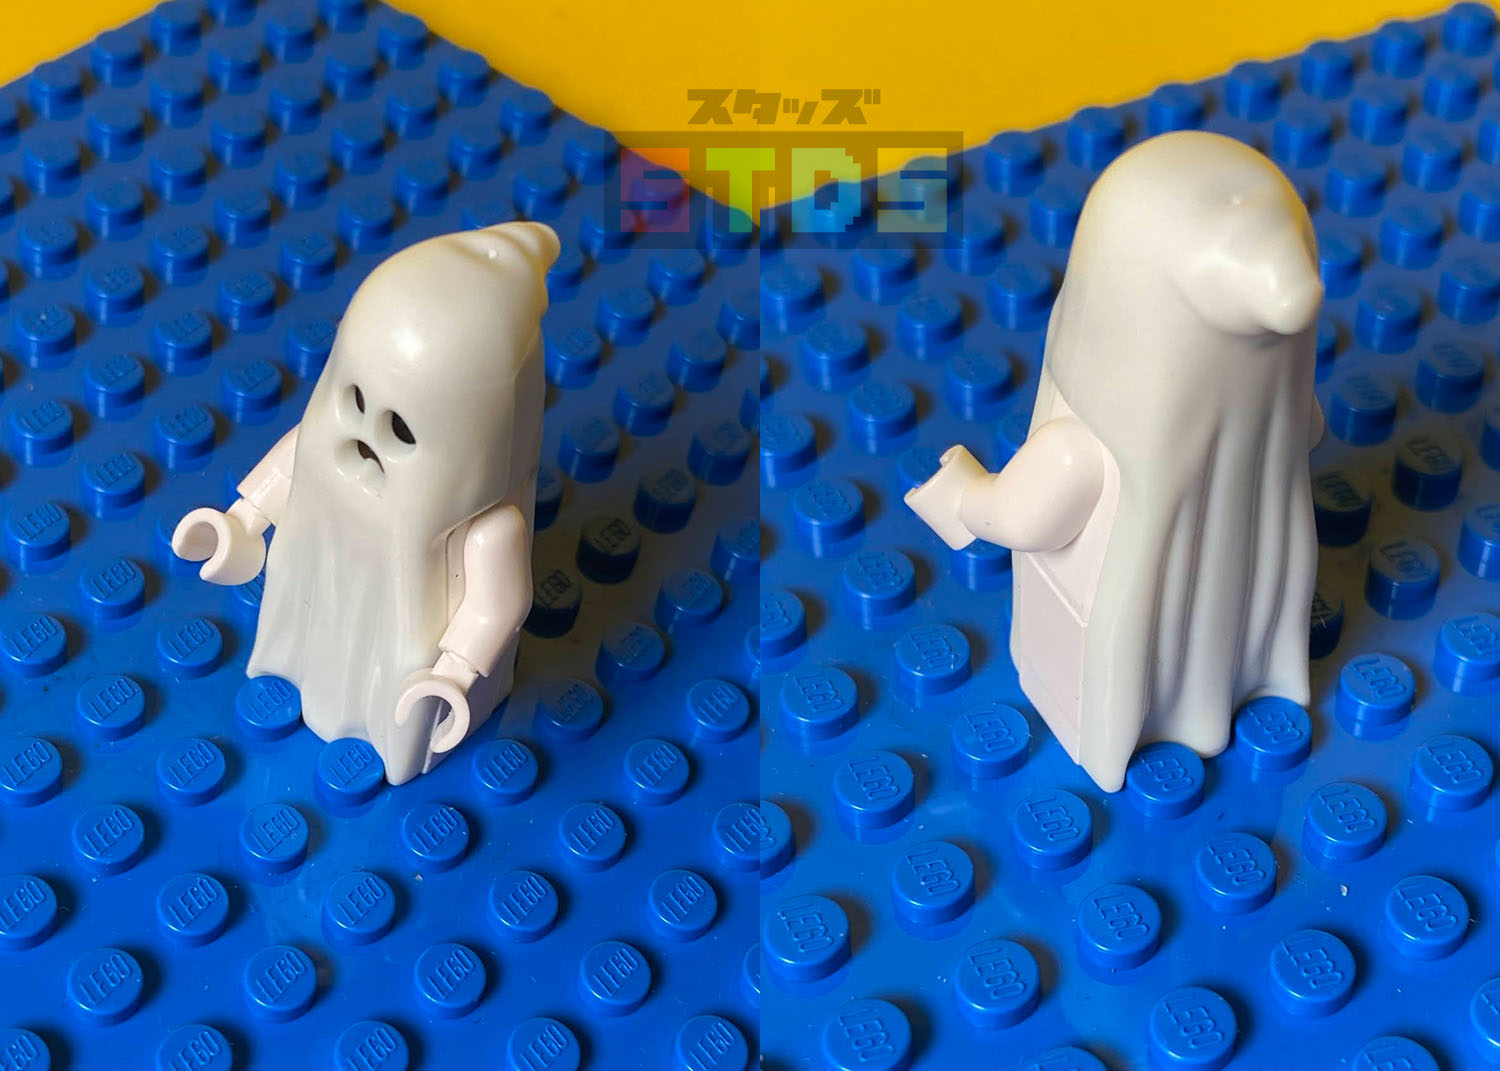 LEGOレビュー：闇夜に光るお化けミニフィギュアがかわいすぎる